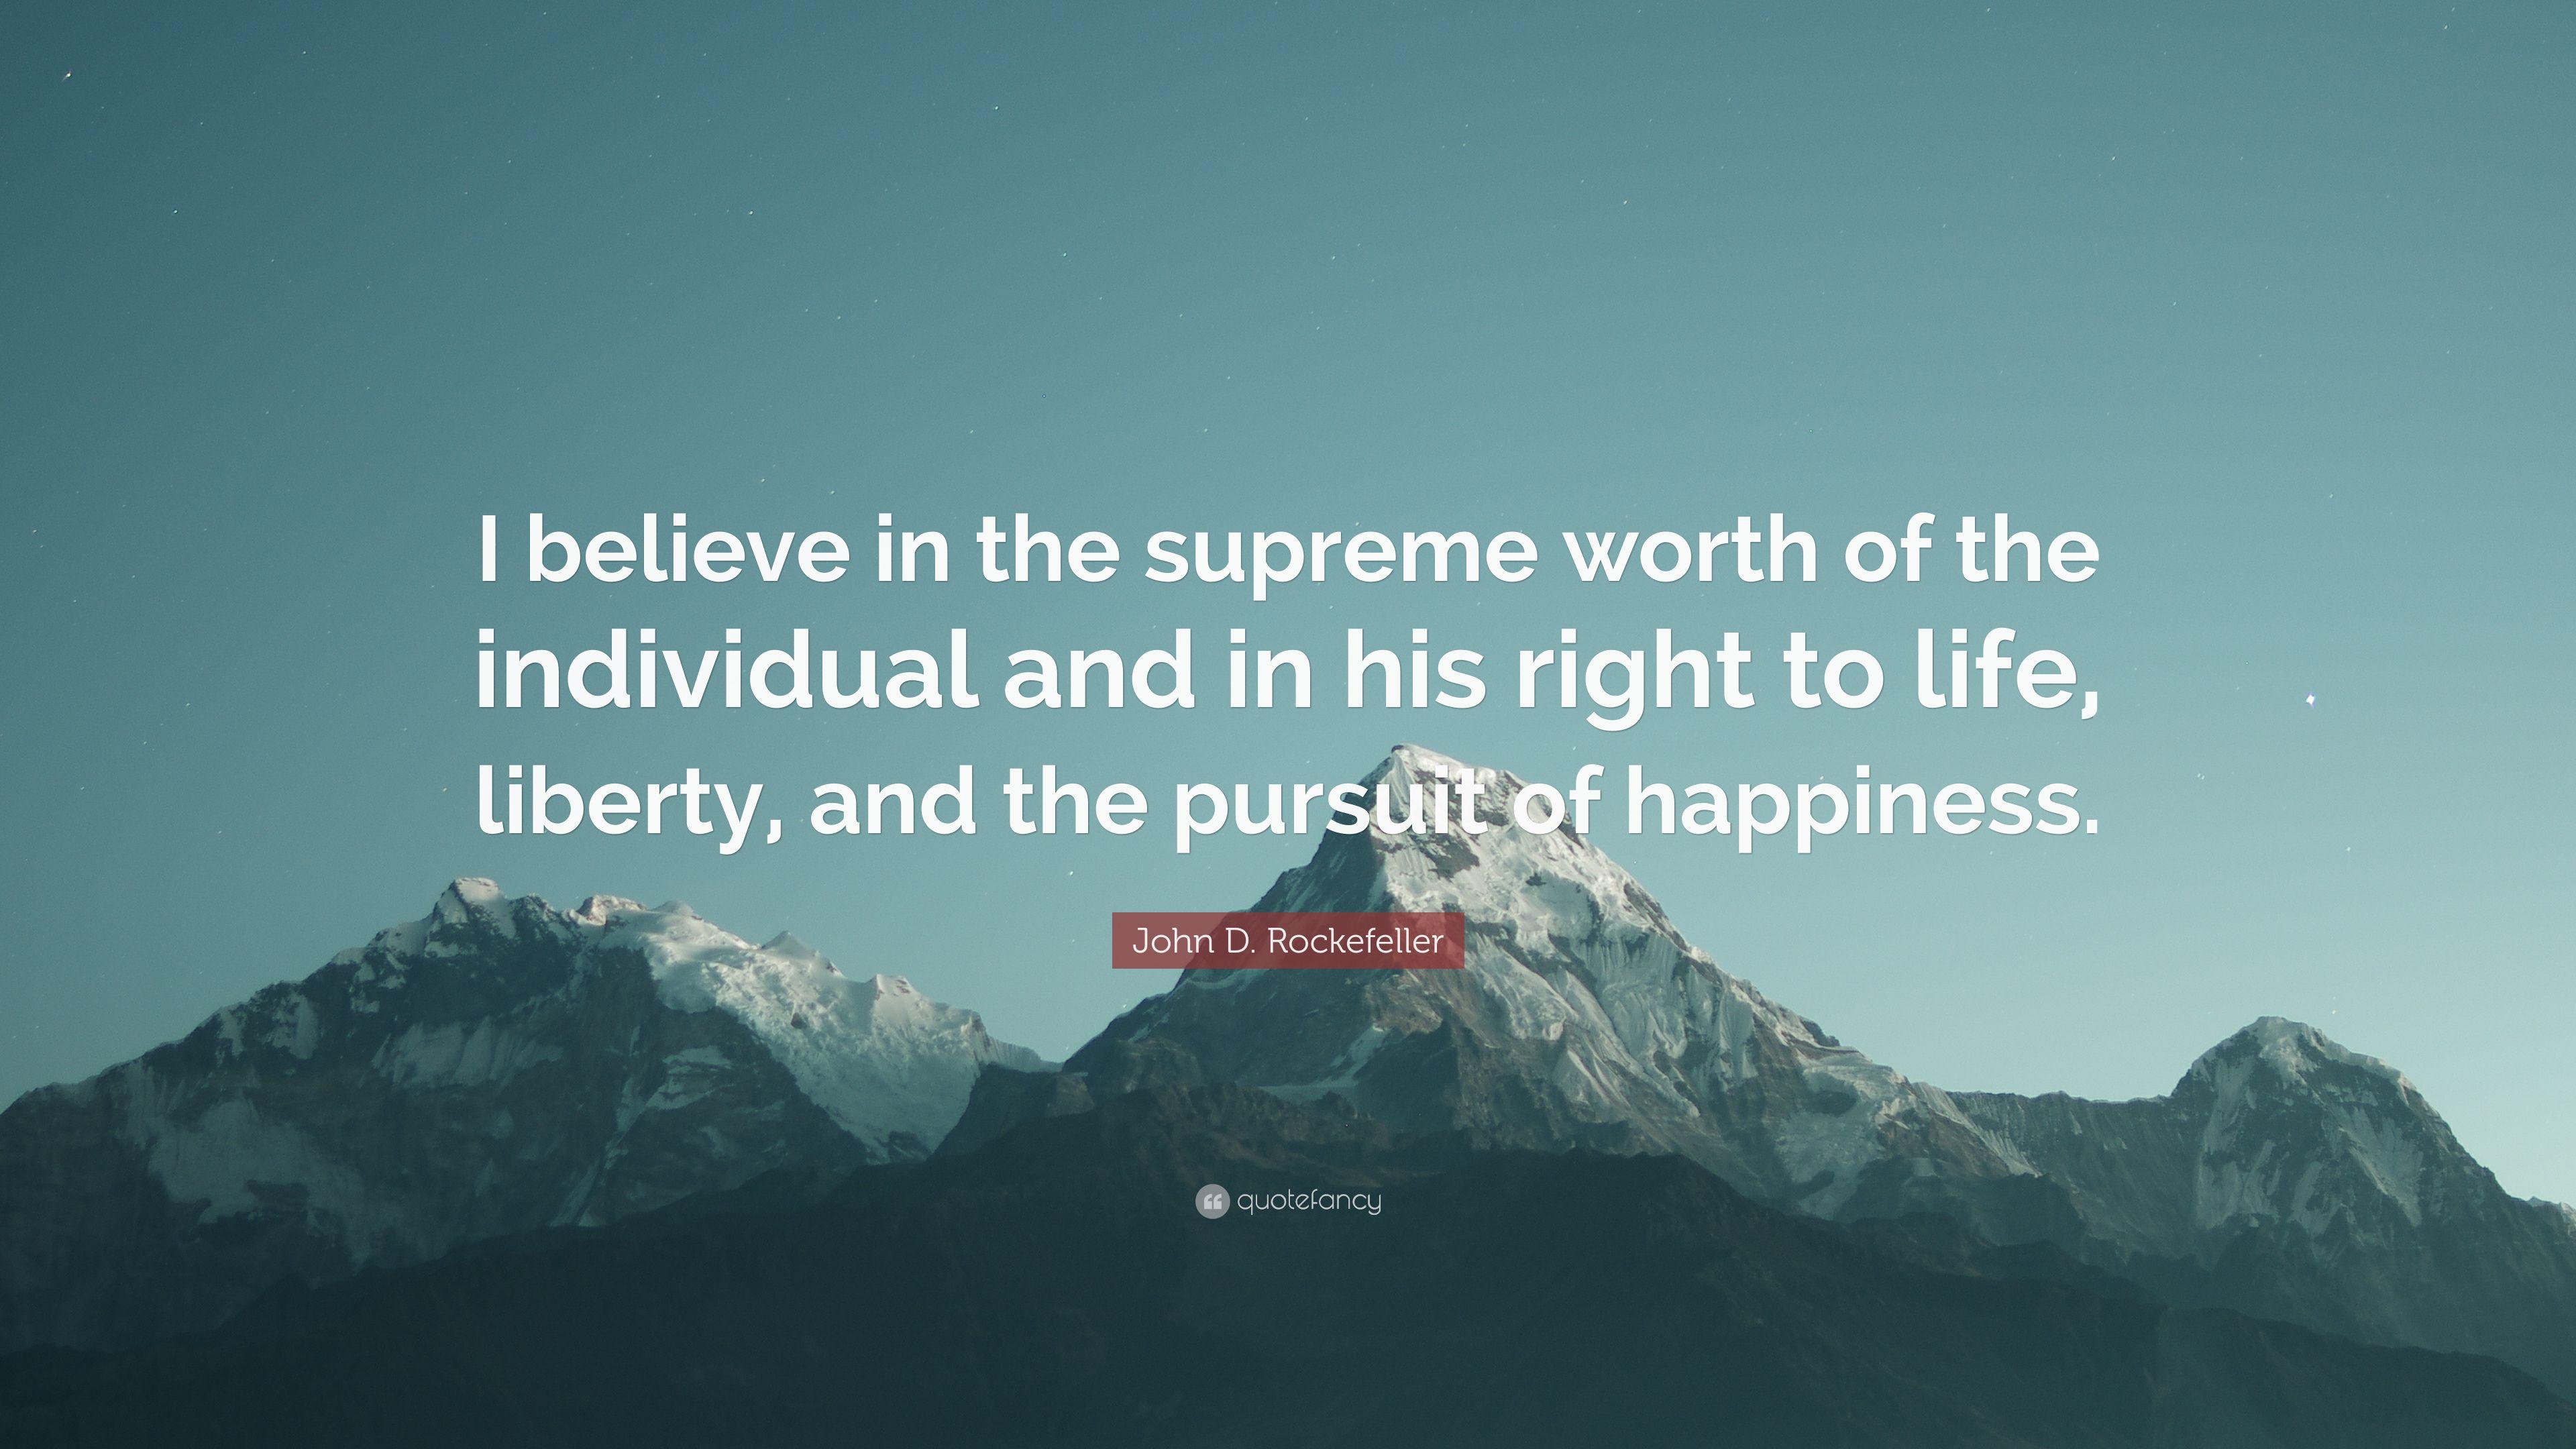 John D. Rockefeller Quote: “I believe in the supreme worth